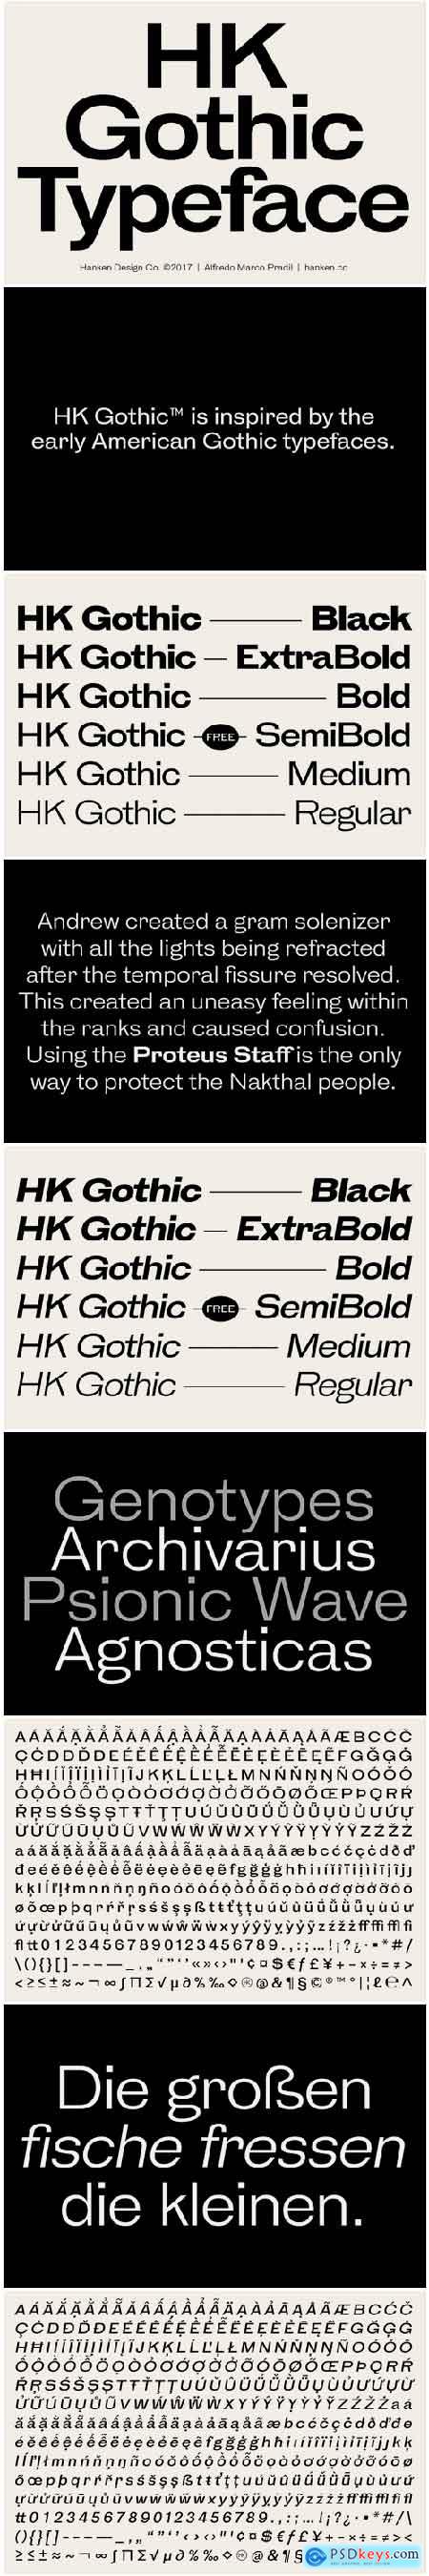 HK Gothic Font Family